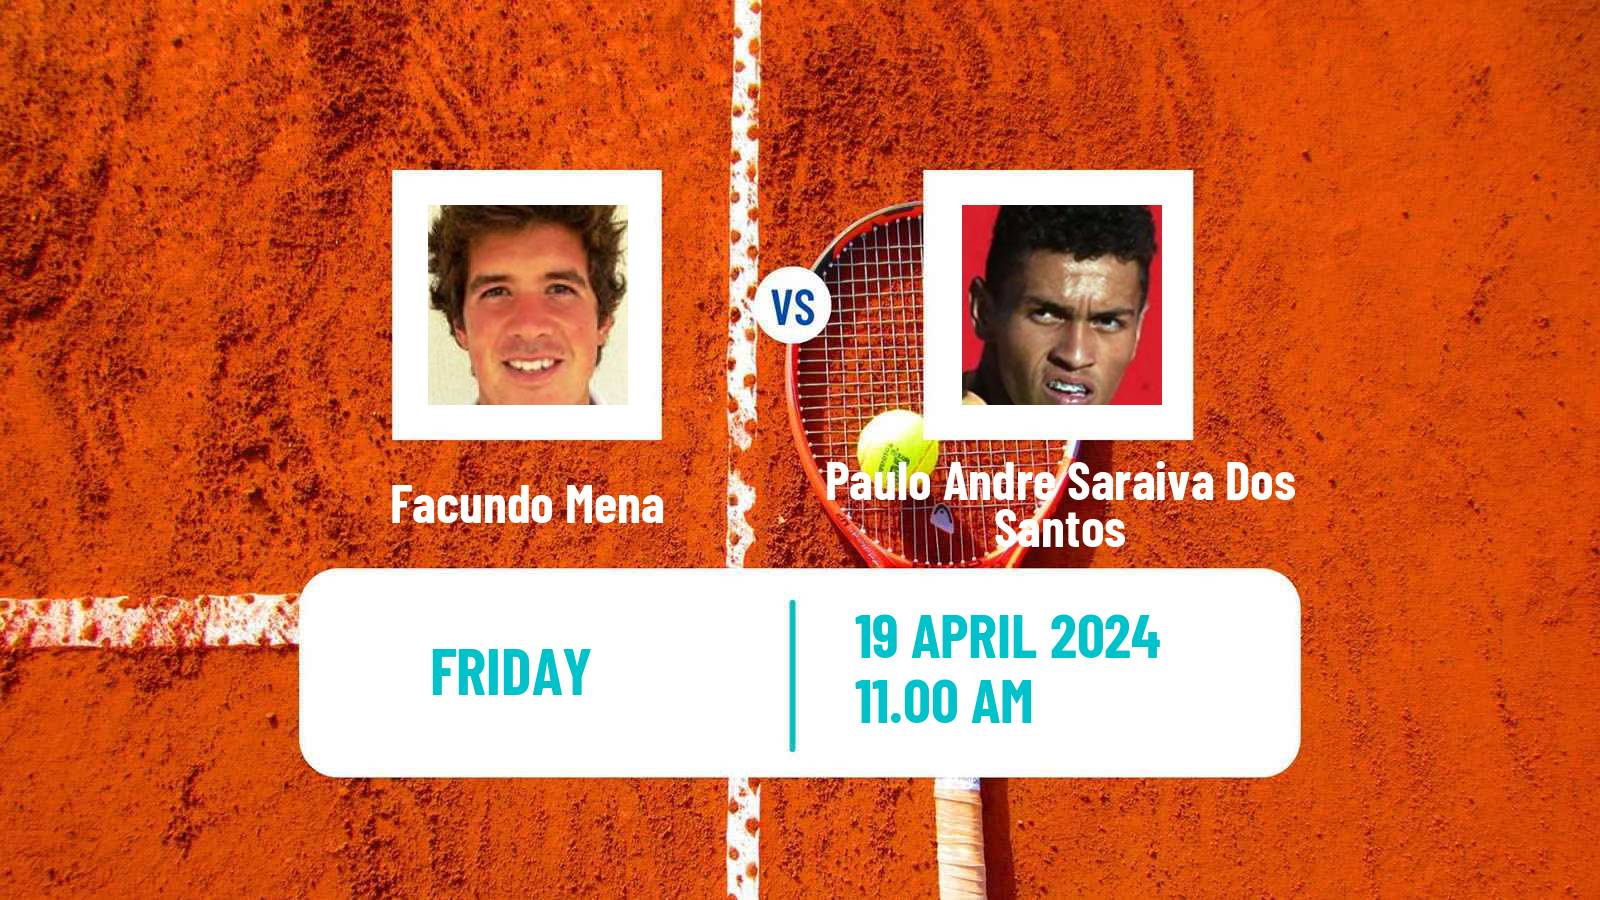 Tennis ITF M15 Santiago Men Facundo Mena - Paulo Andre Saraiva Dos Santos